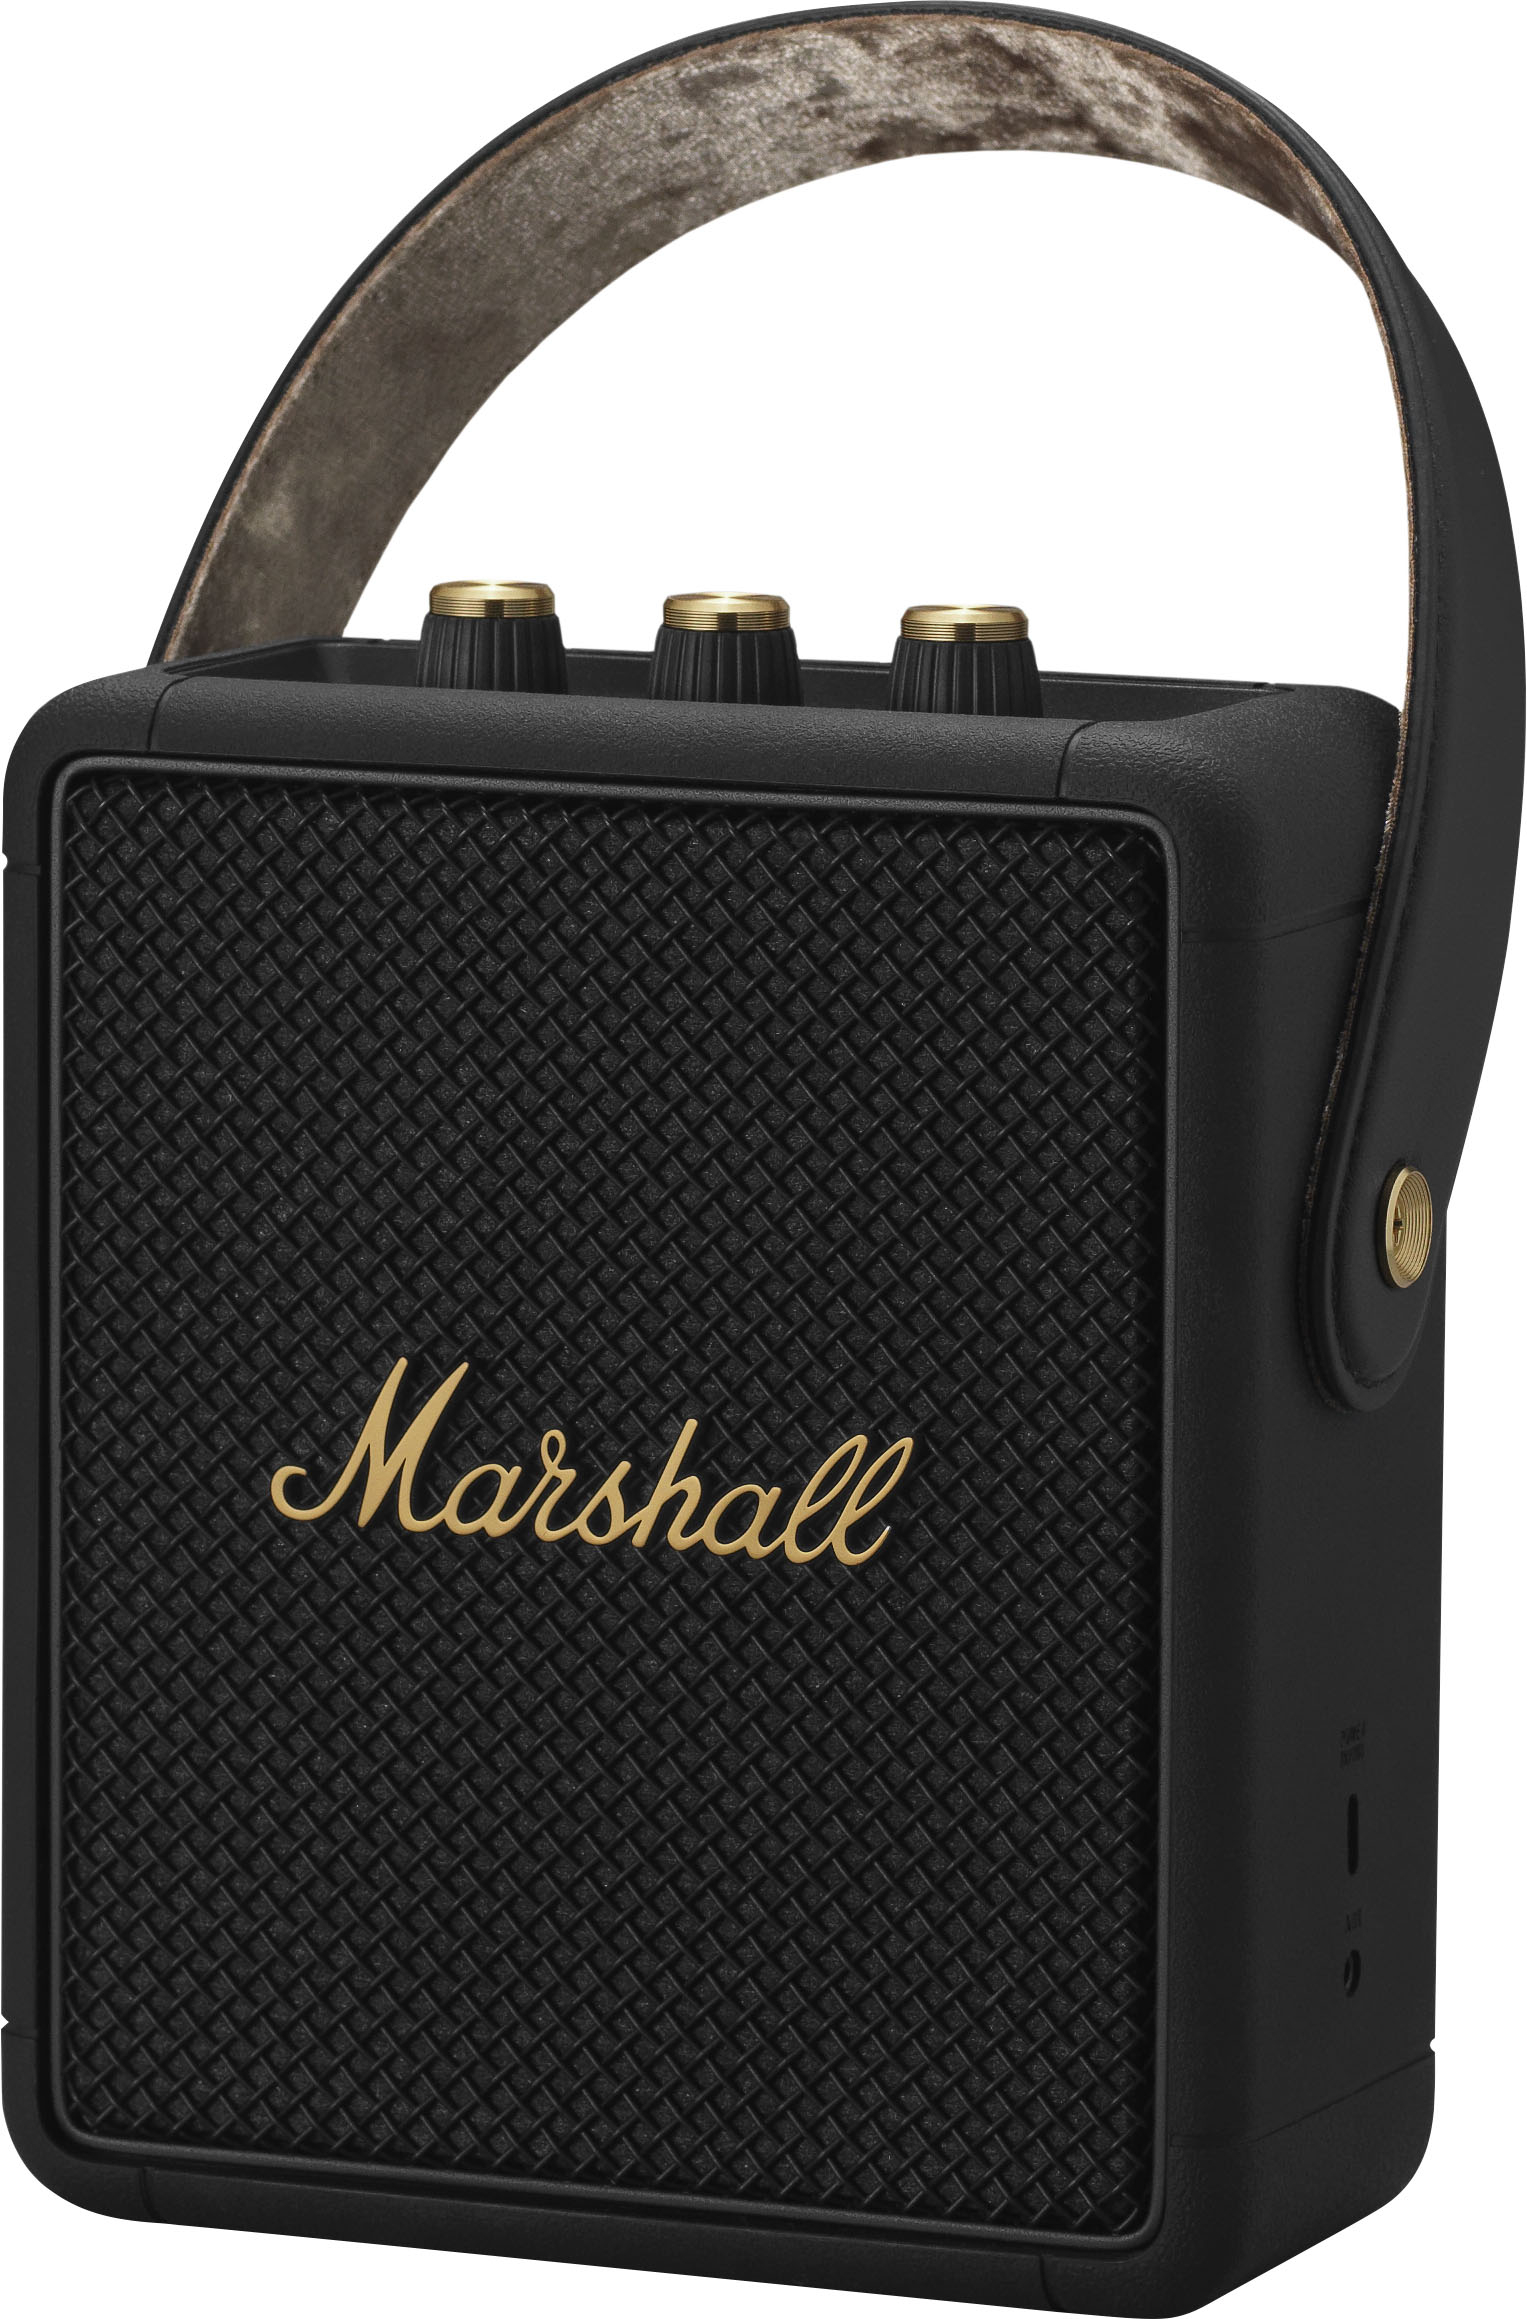 Marshall Stockwell II Portable Bluetooth Speaker Black & Brass